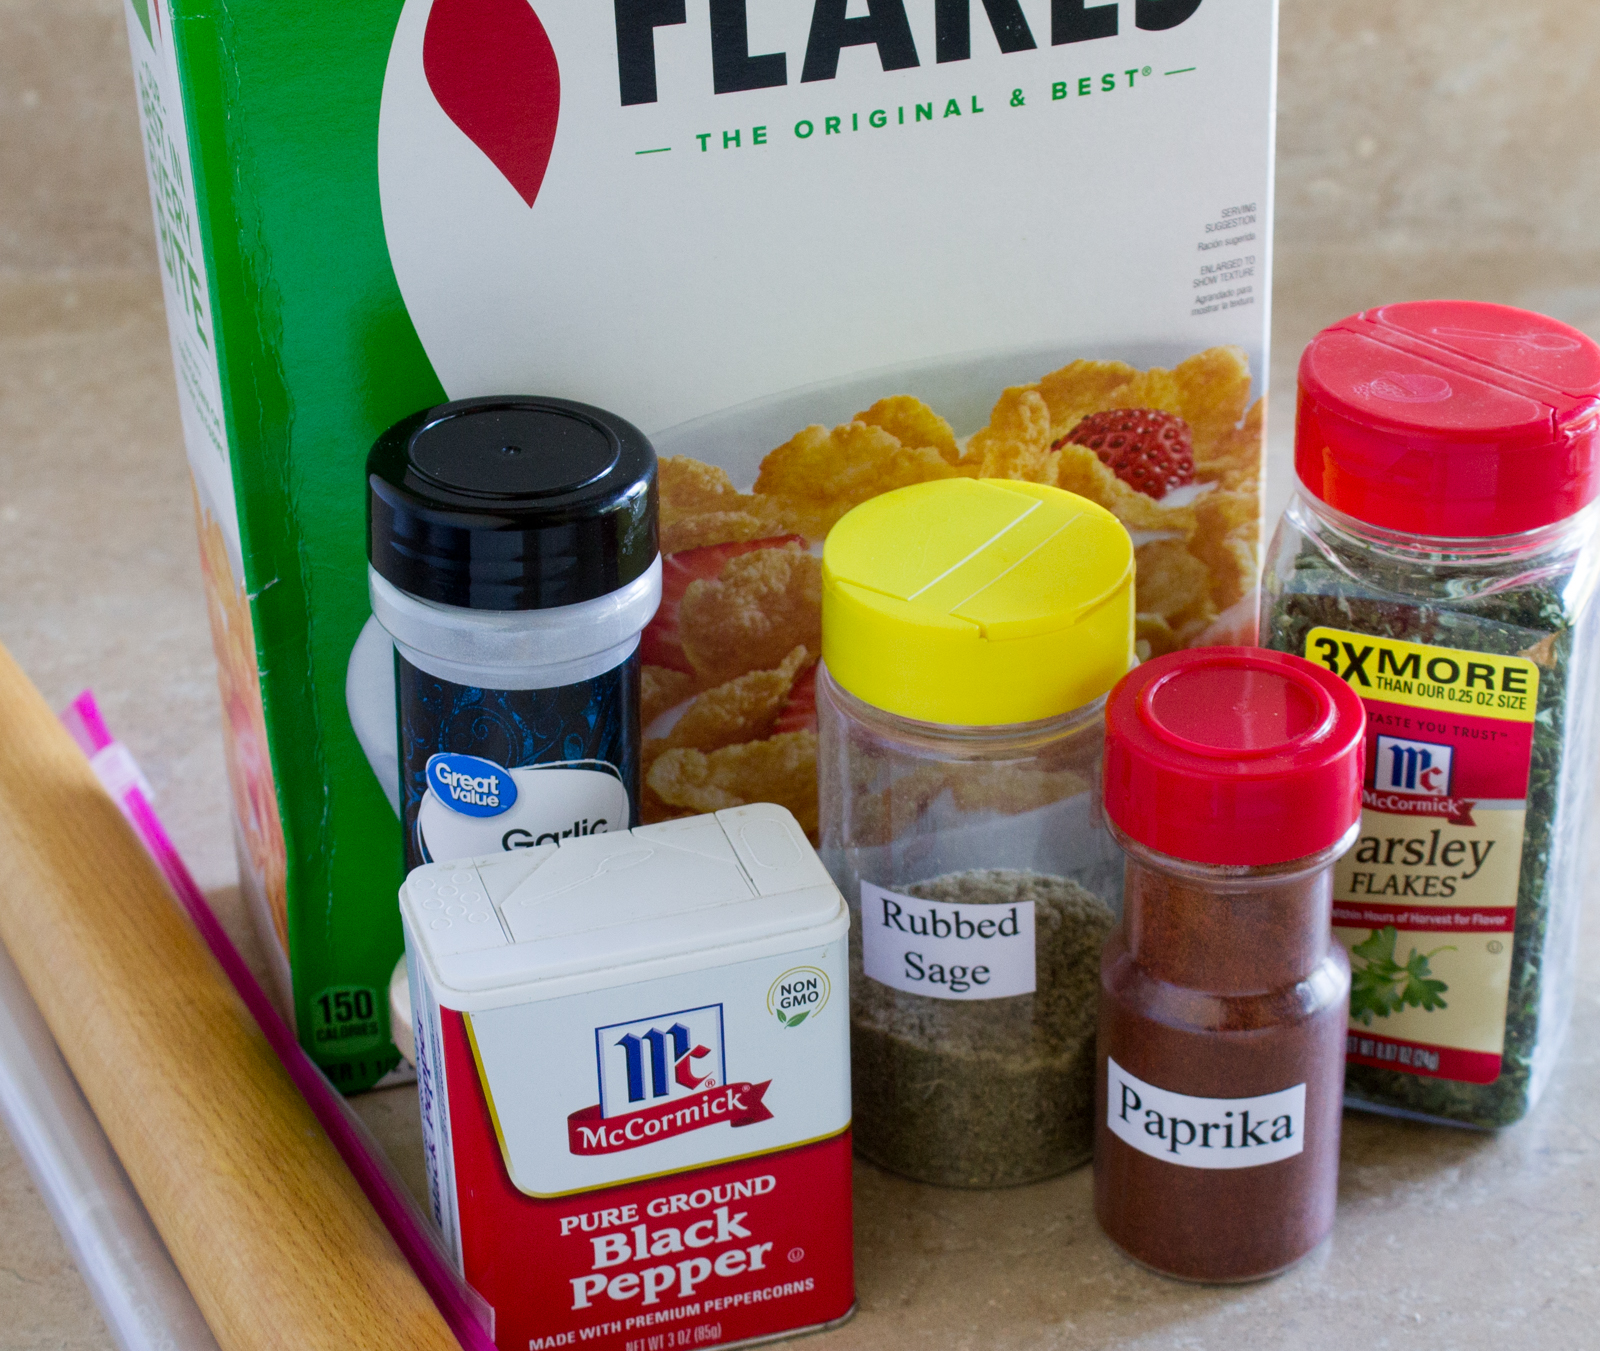 Ingredients - box of corn flakes, garlic salt, rubbed sage, dried parsley flakes, black pepper, and paprika